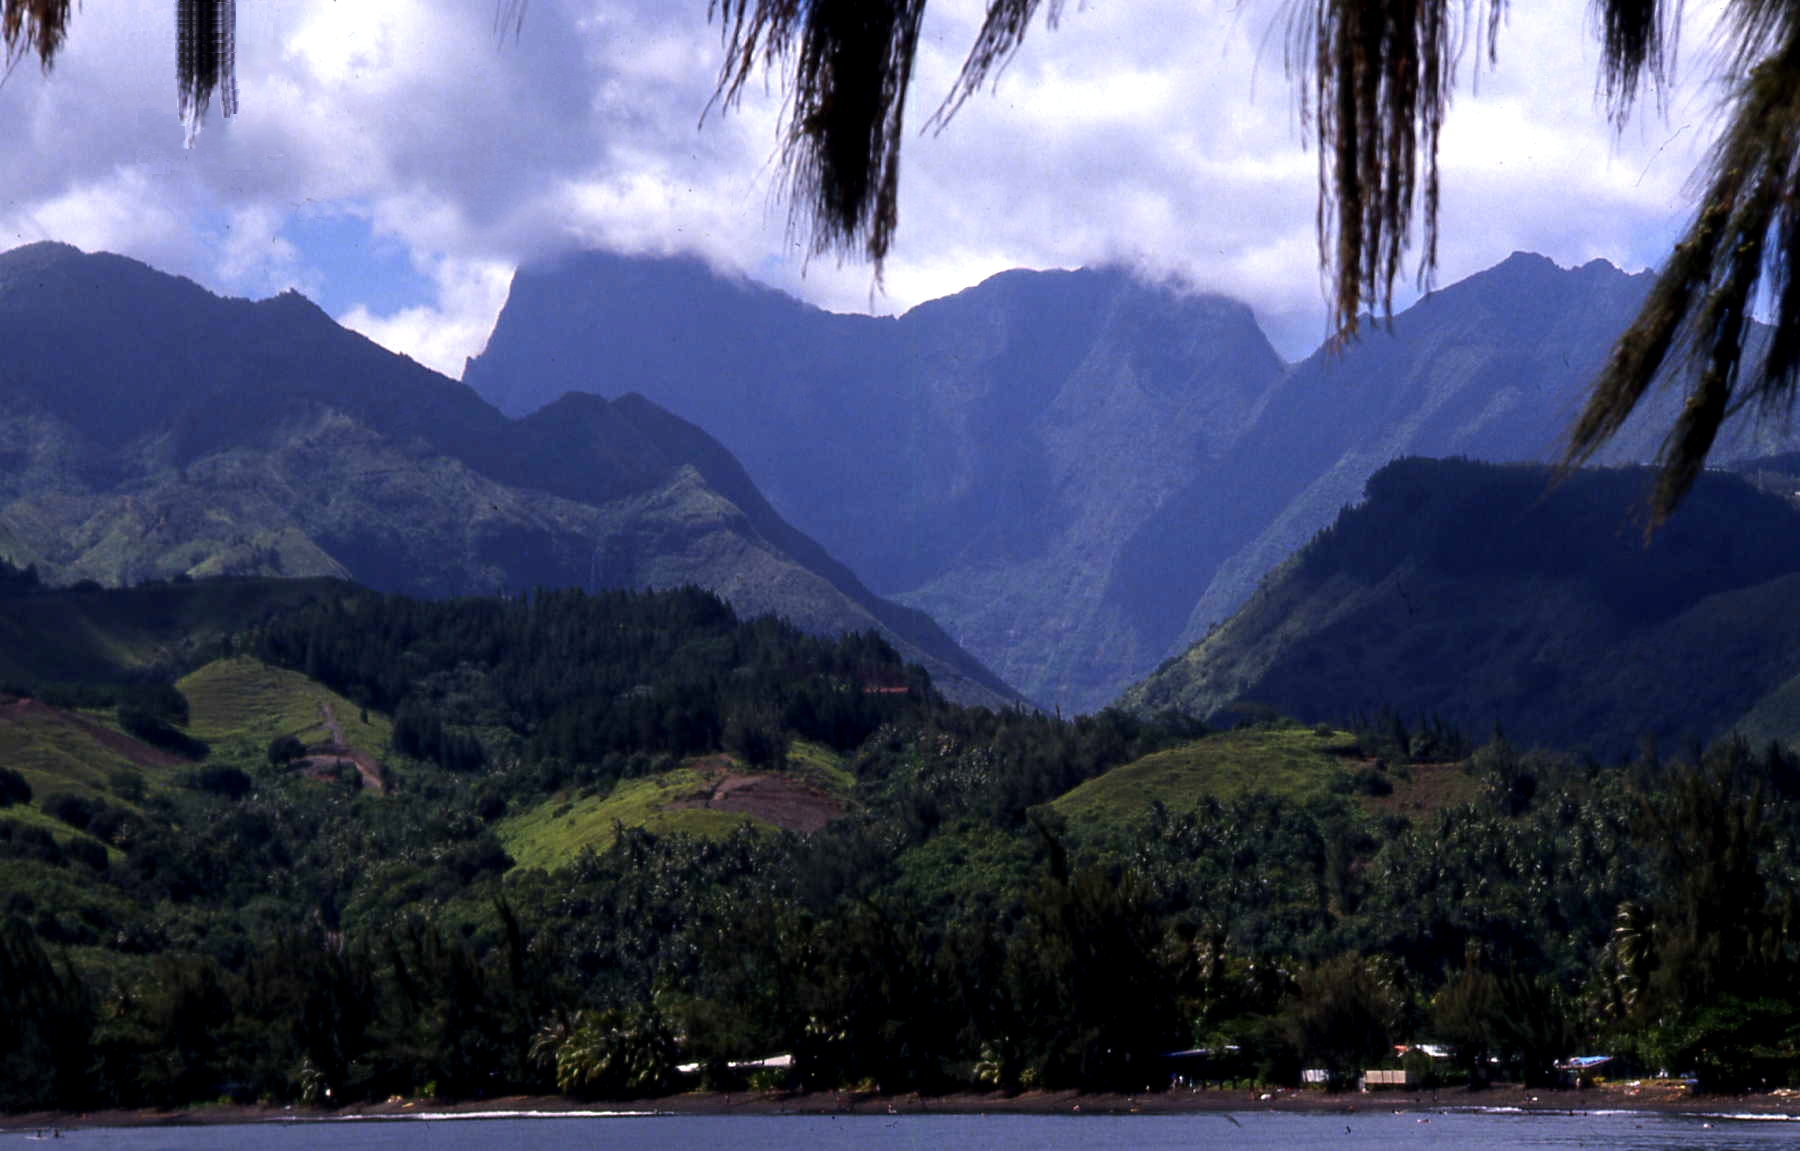 Tahiti mountains